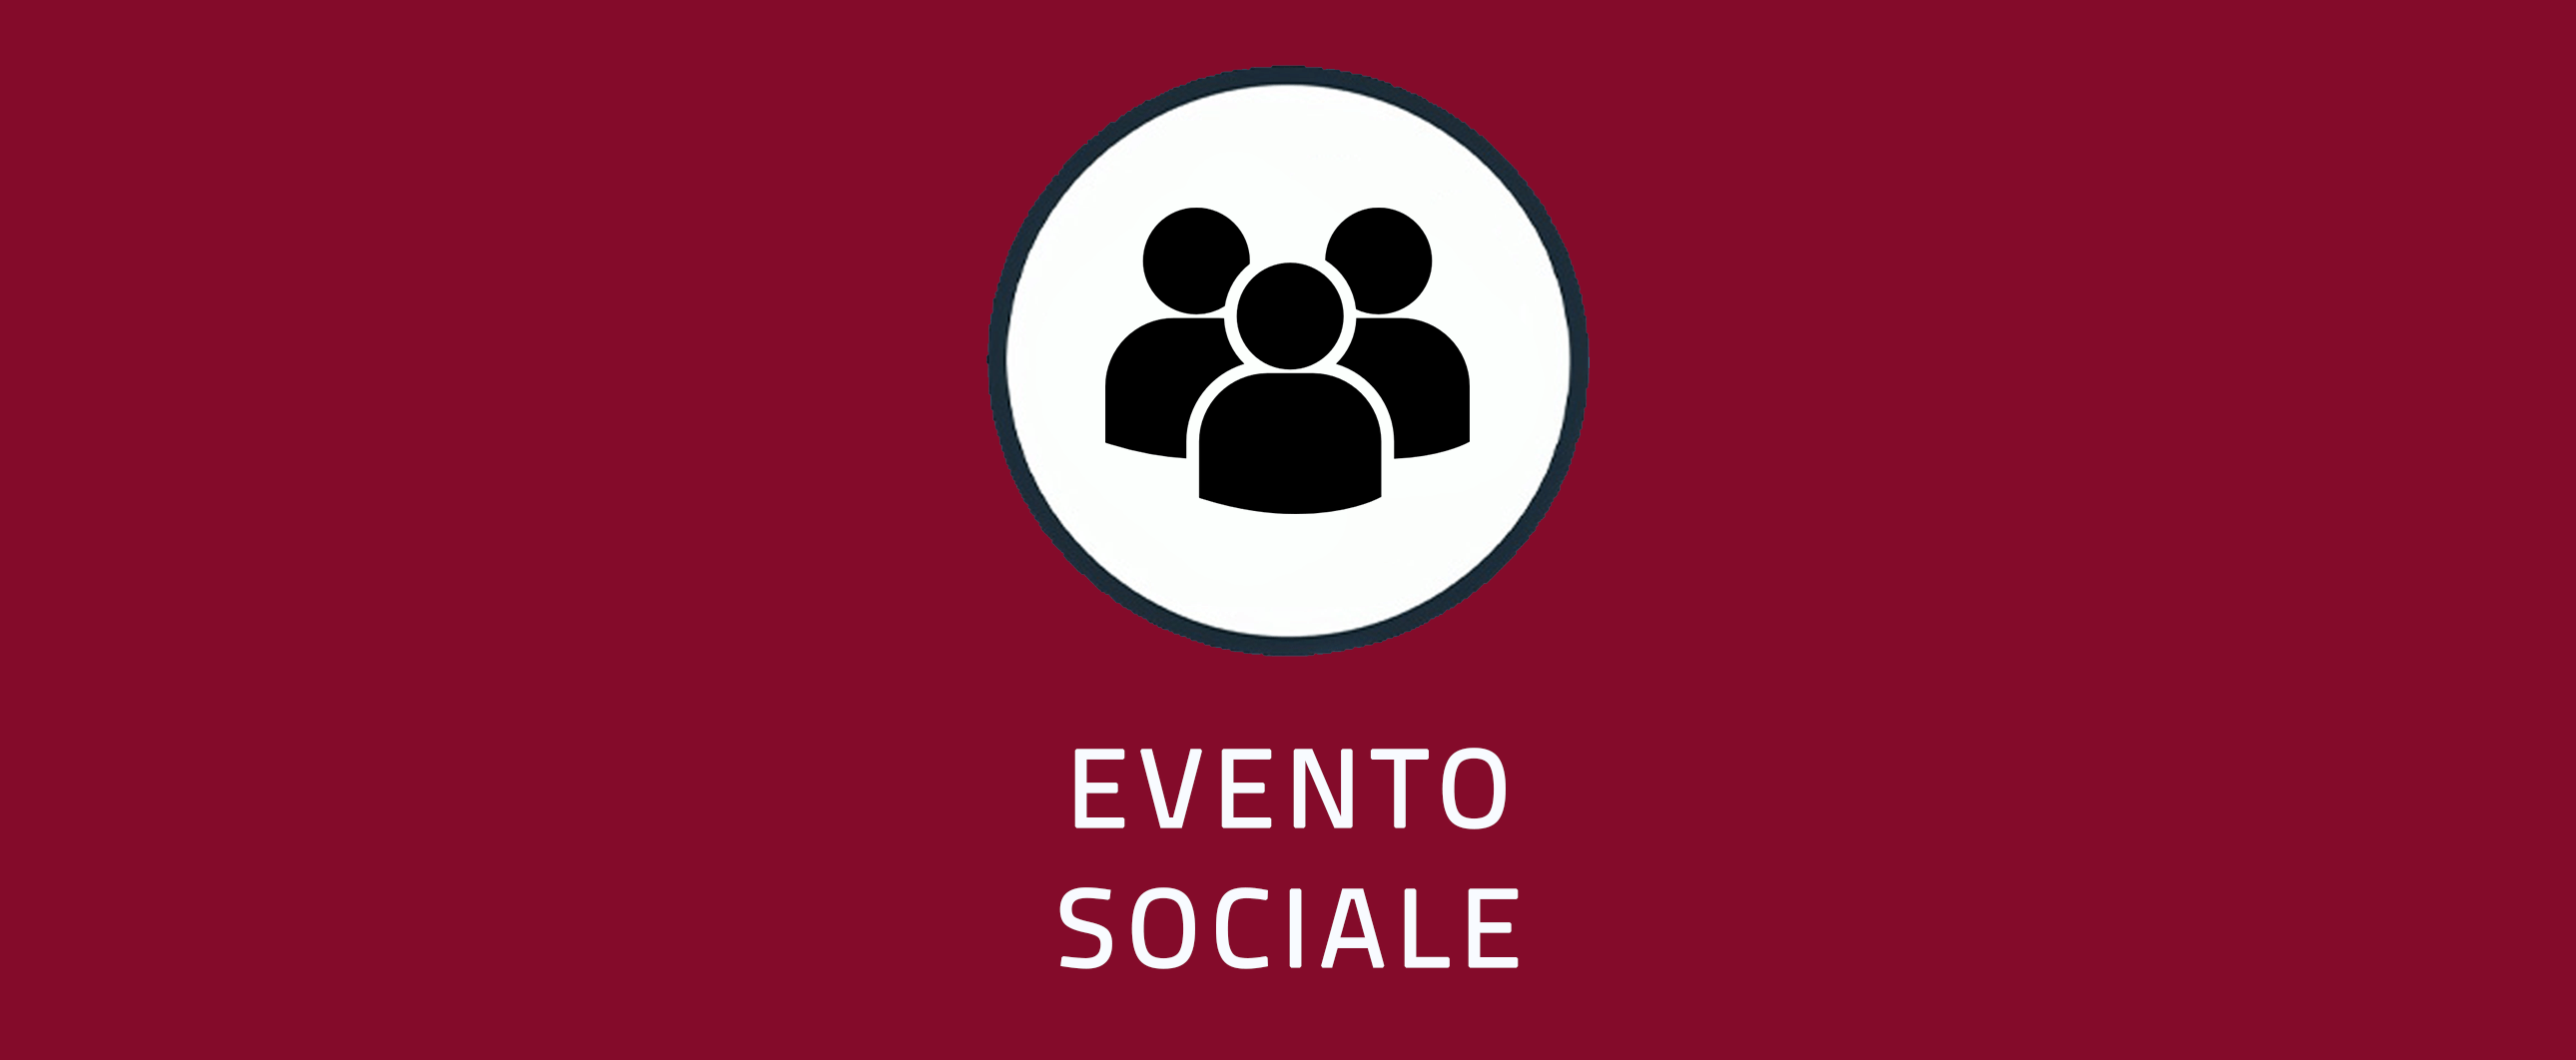 avviso-evento-sociale